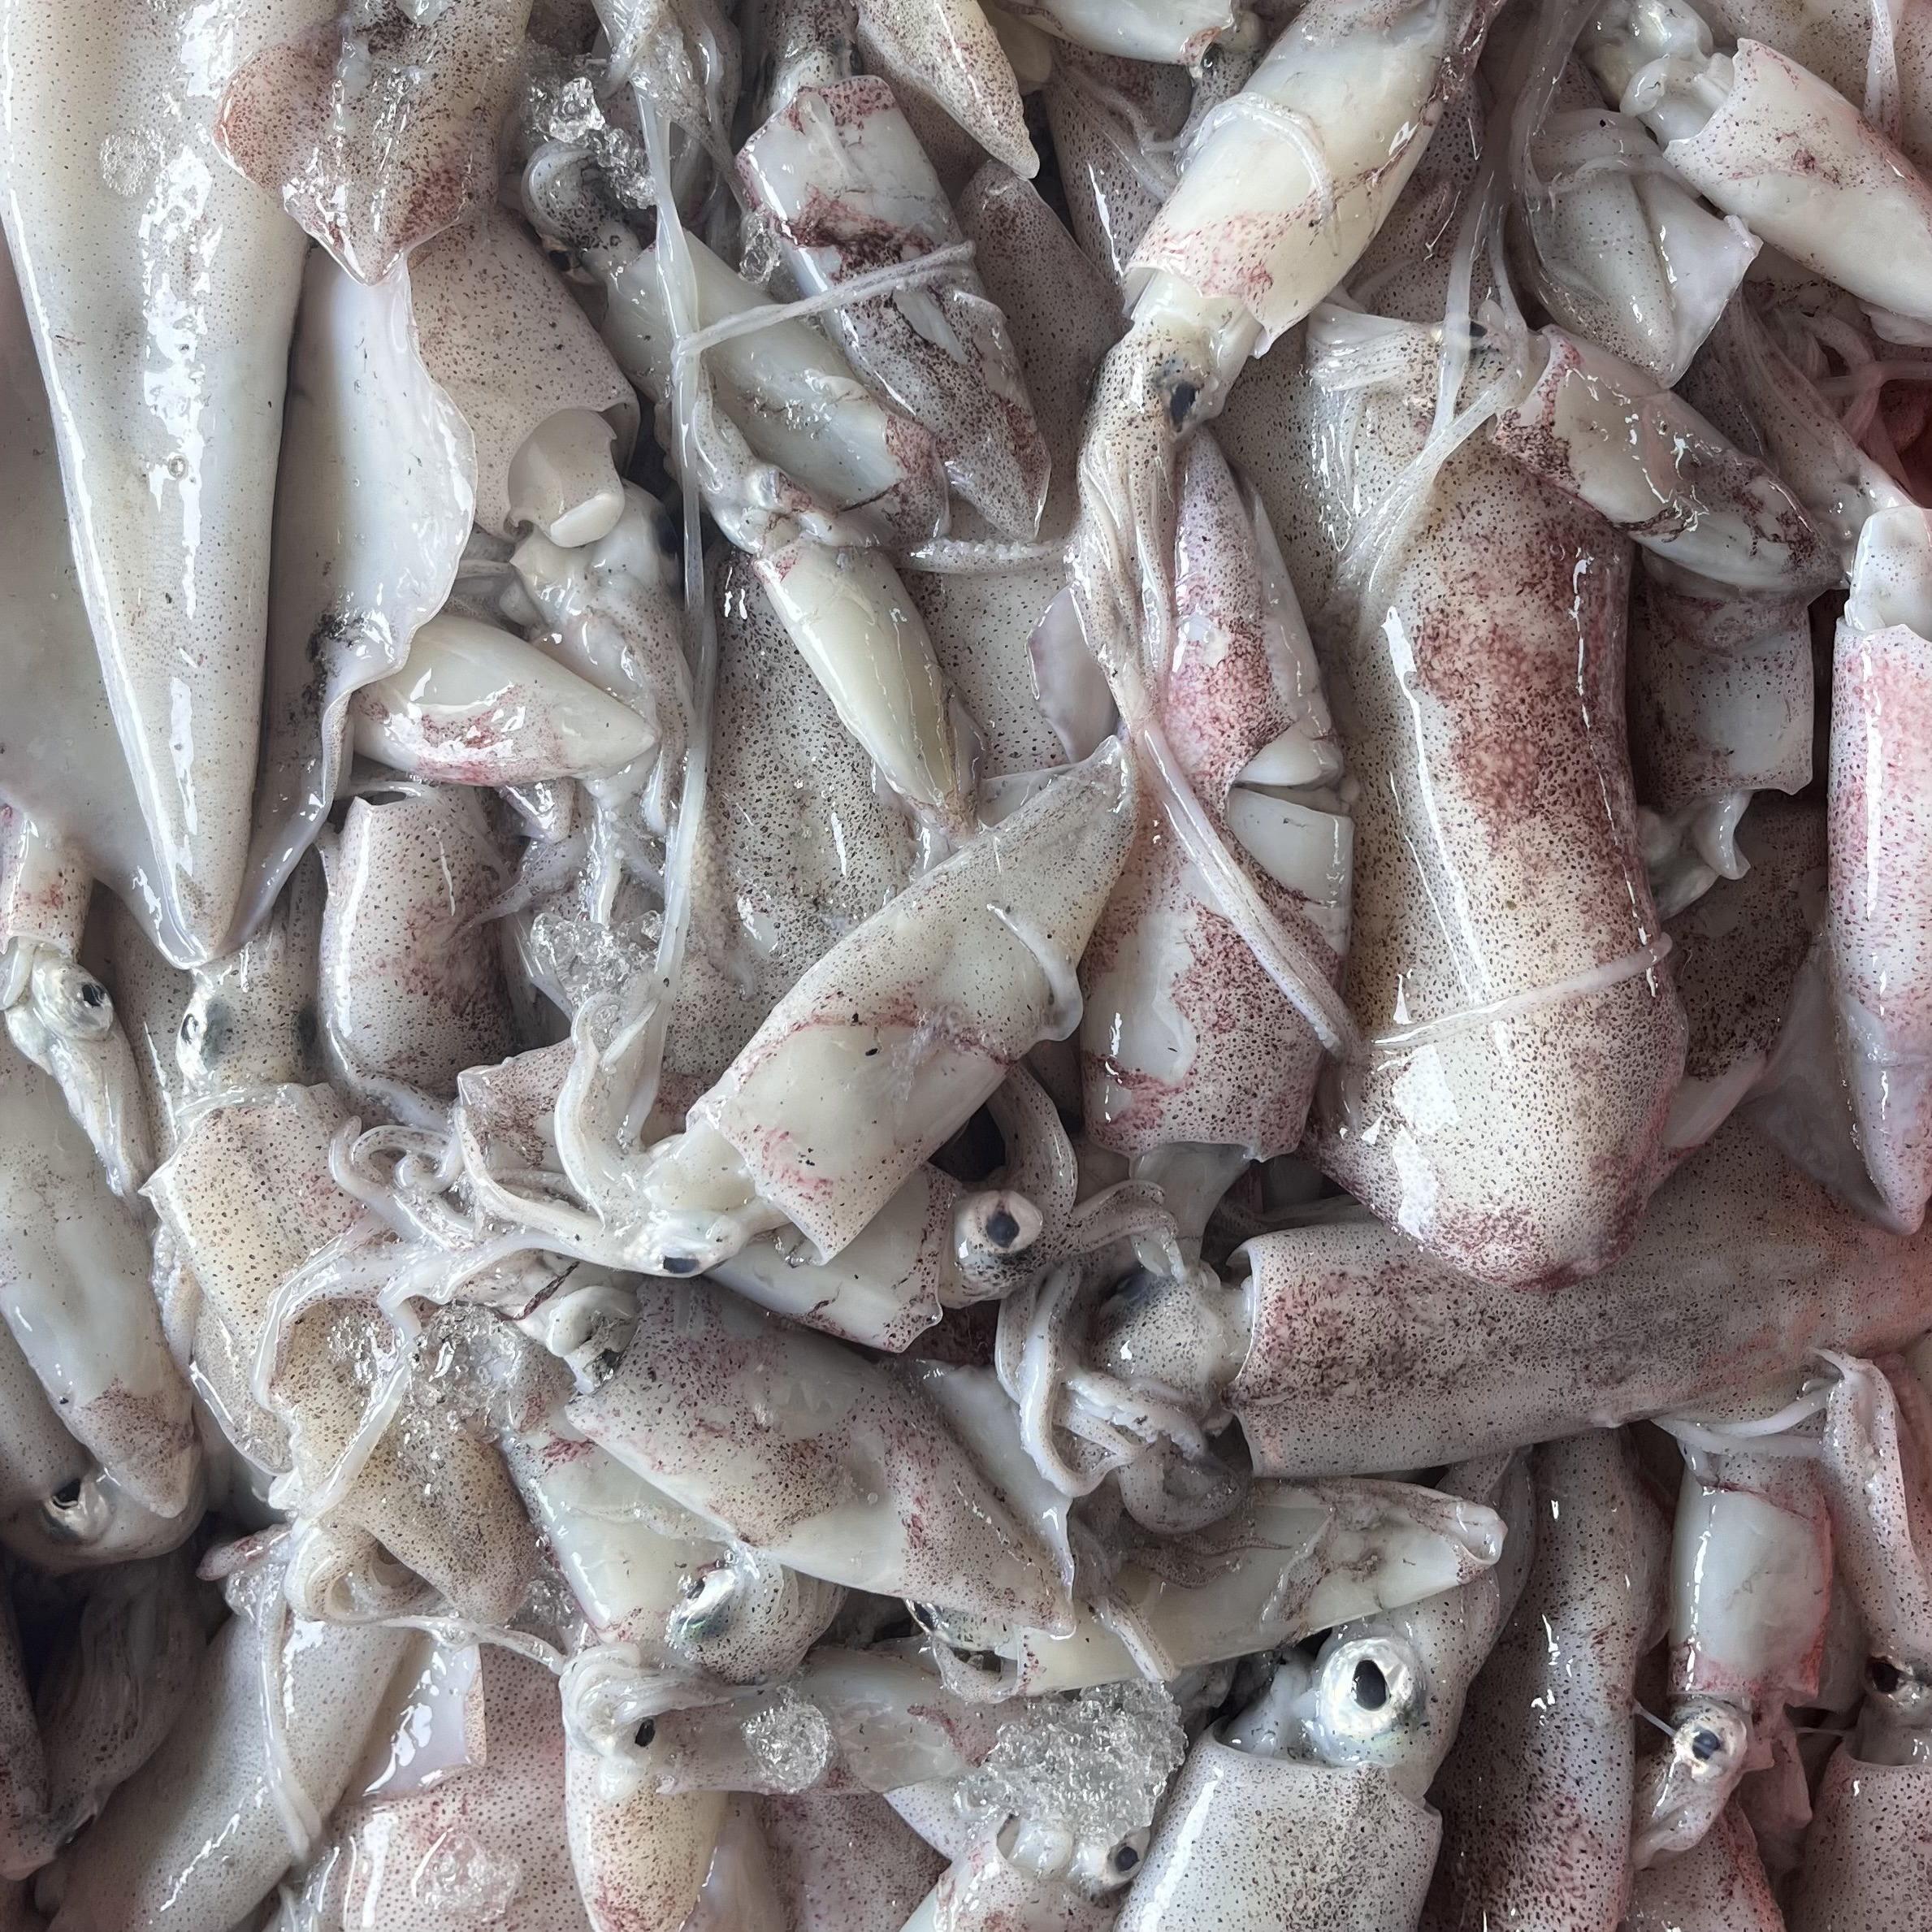 Fresh Frozen Vannamei Shrimps